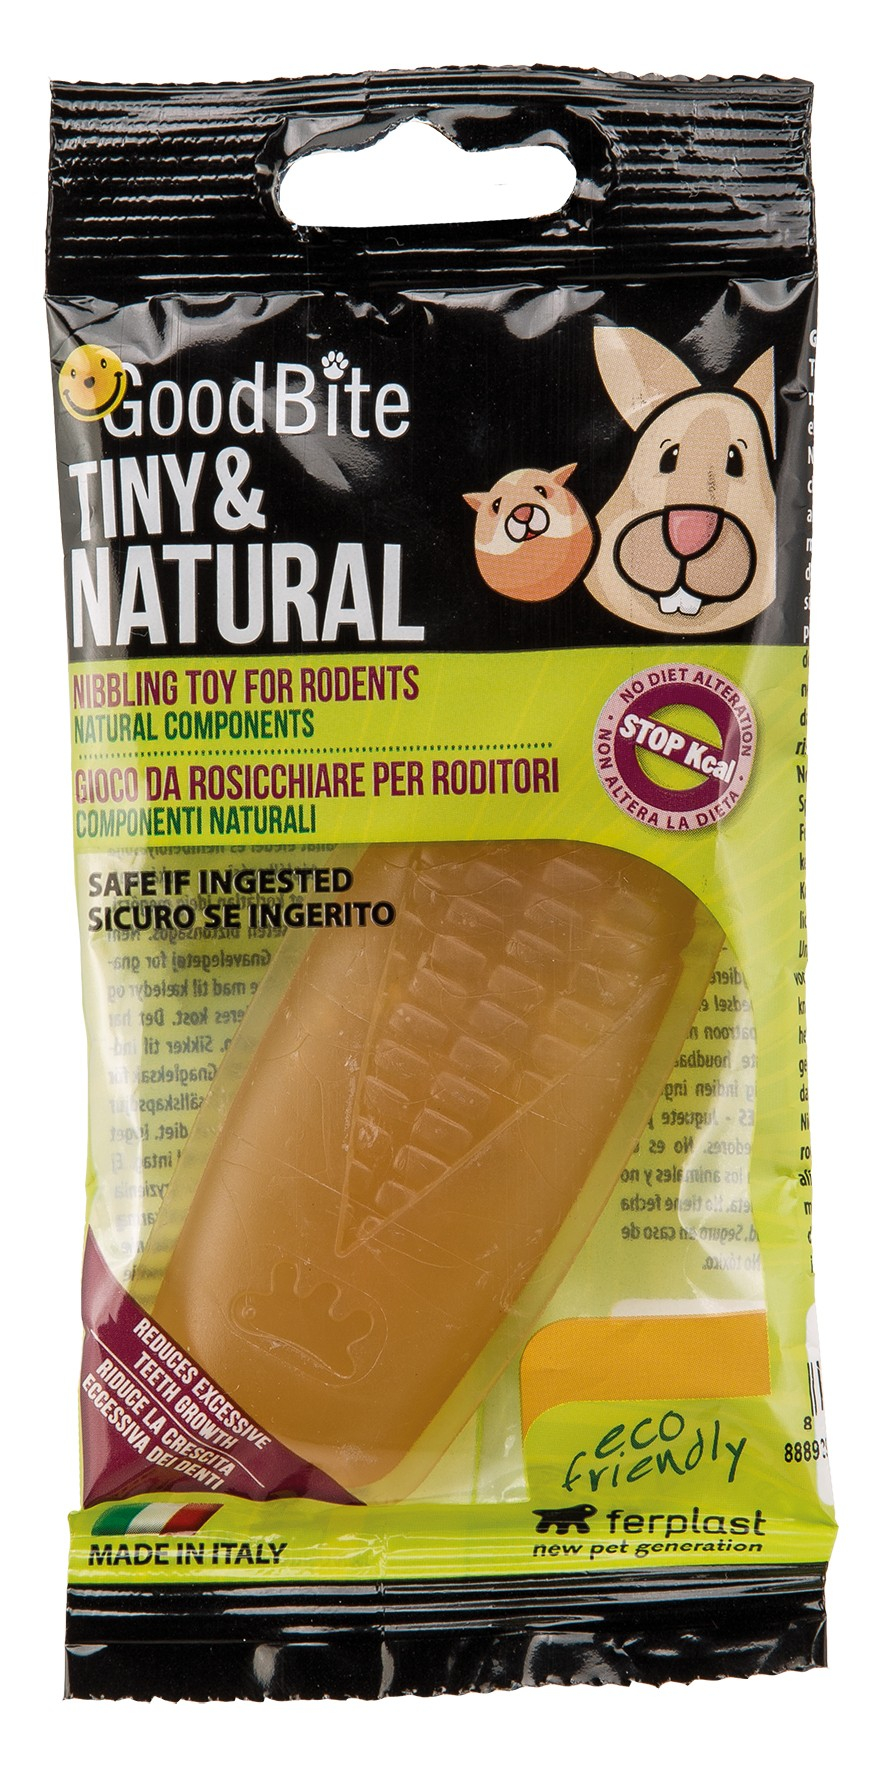 Goodbite Tiny & Natural Corncob Bag